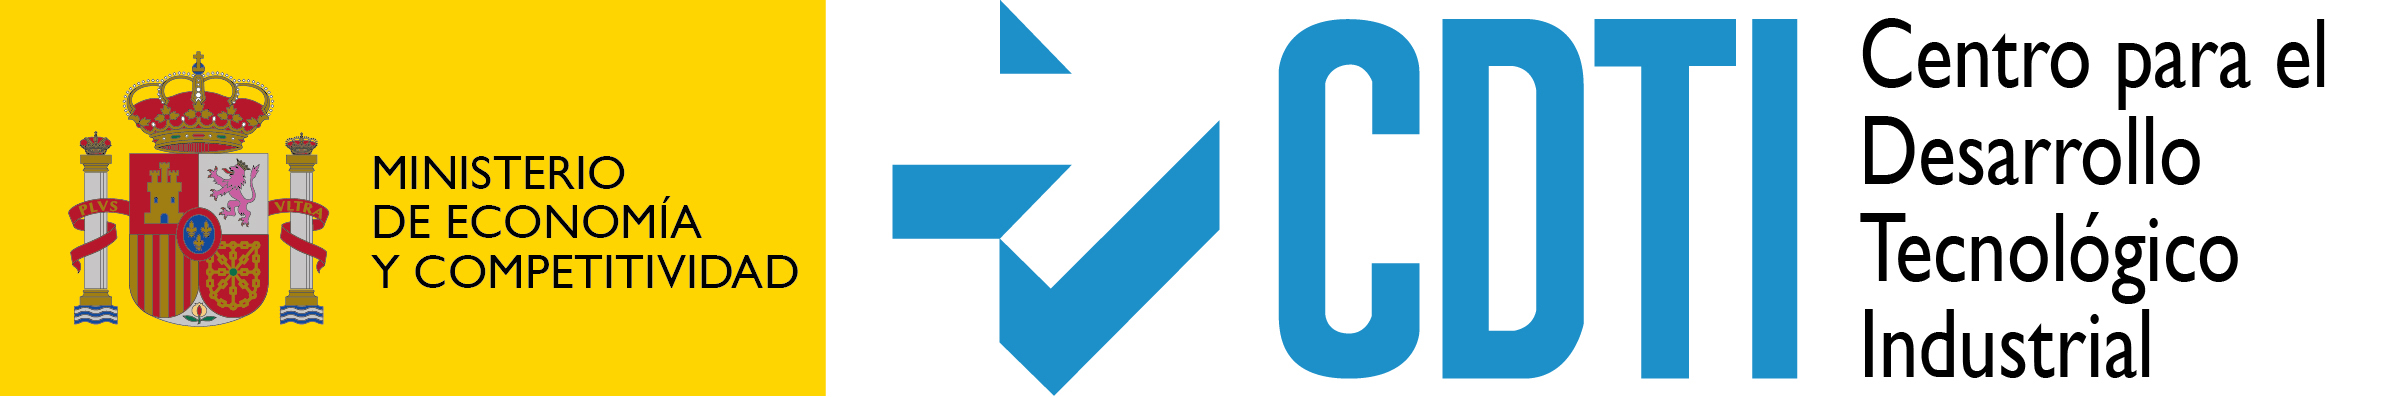 Logo_CDTI